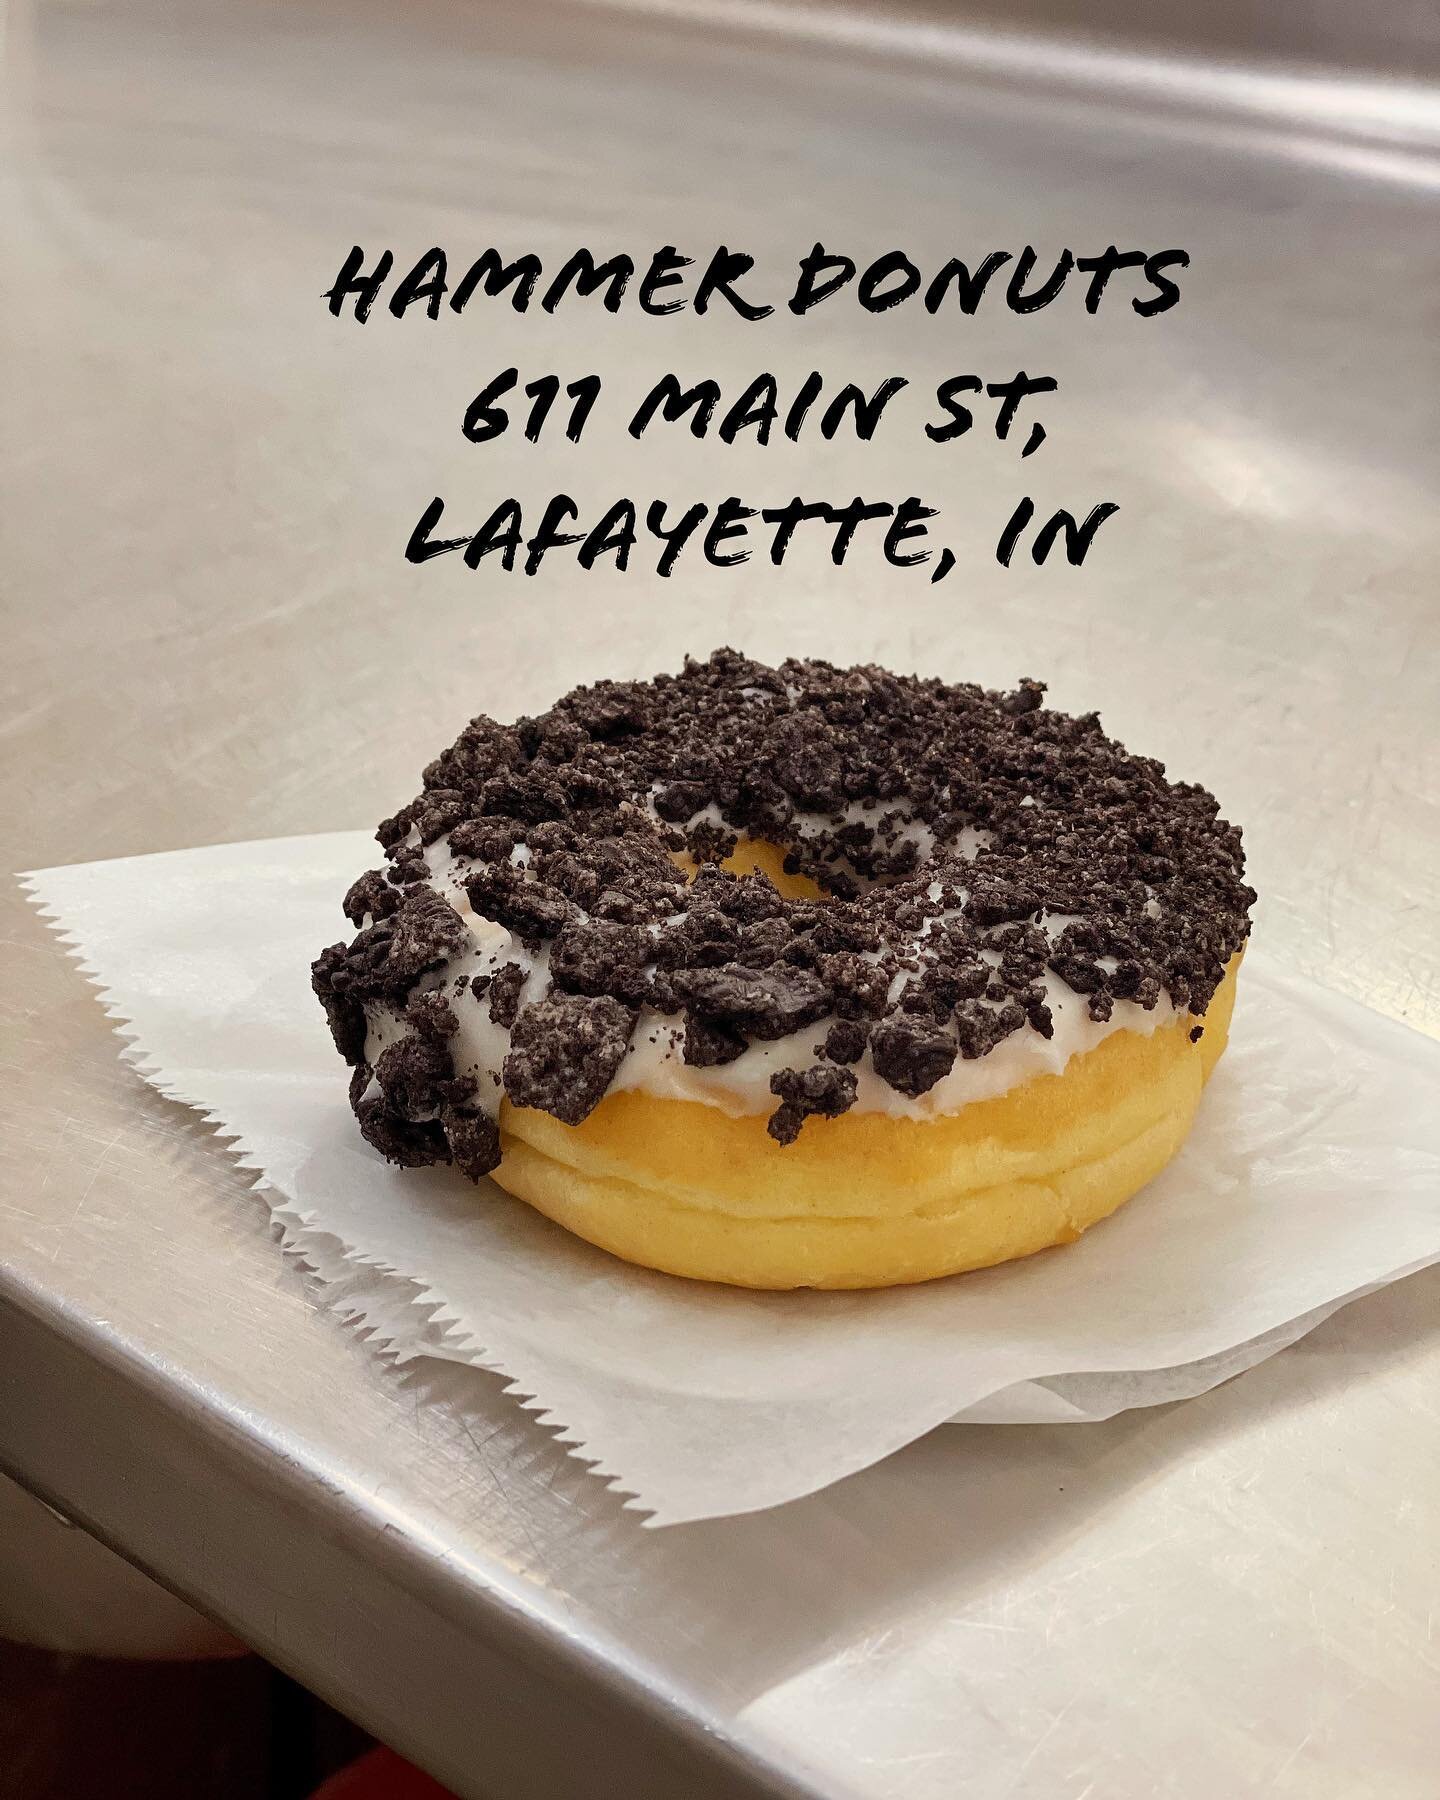 Stop by for some self-care treats!

#hammerdonuts #freshdonuts #handmadedonuts #donuts #doughnuts #donutshop #donutandcoffee #fooddelivery #grubhub #cakedonuts #yeastdonuts #downtownlafayette #sprinkledonut #glazeddonuts #filleddonuts  #ドーナツ #甜甜圈 #도넛